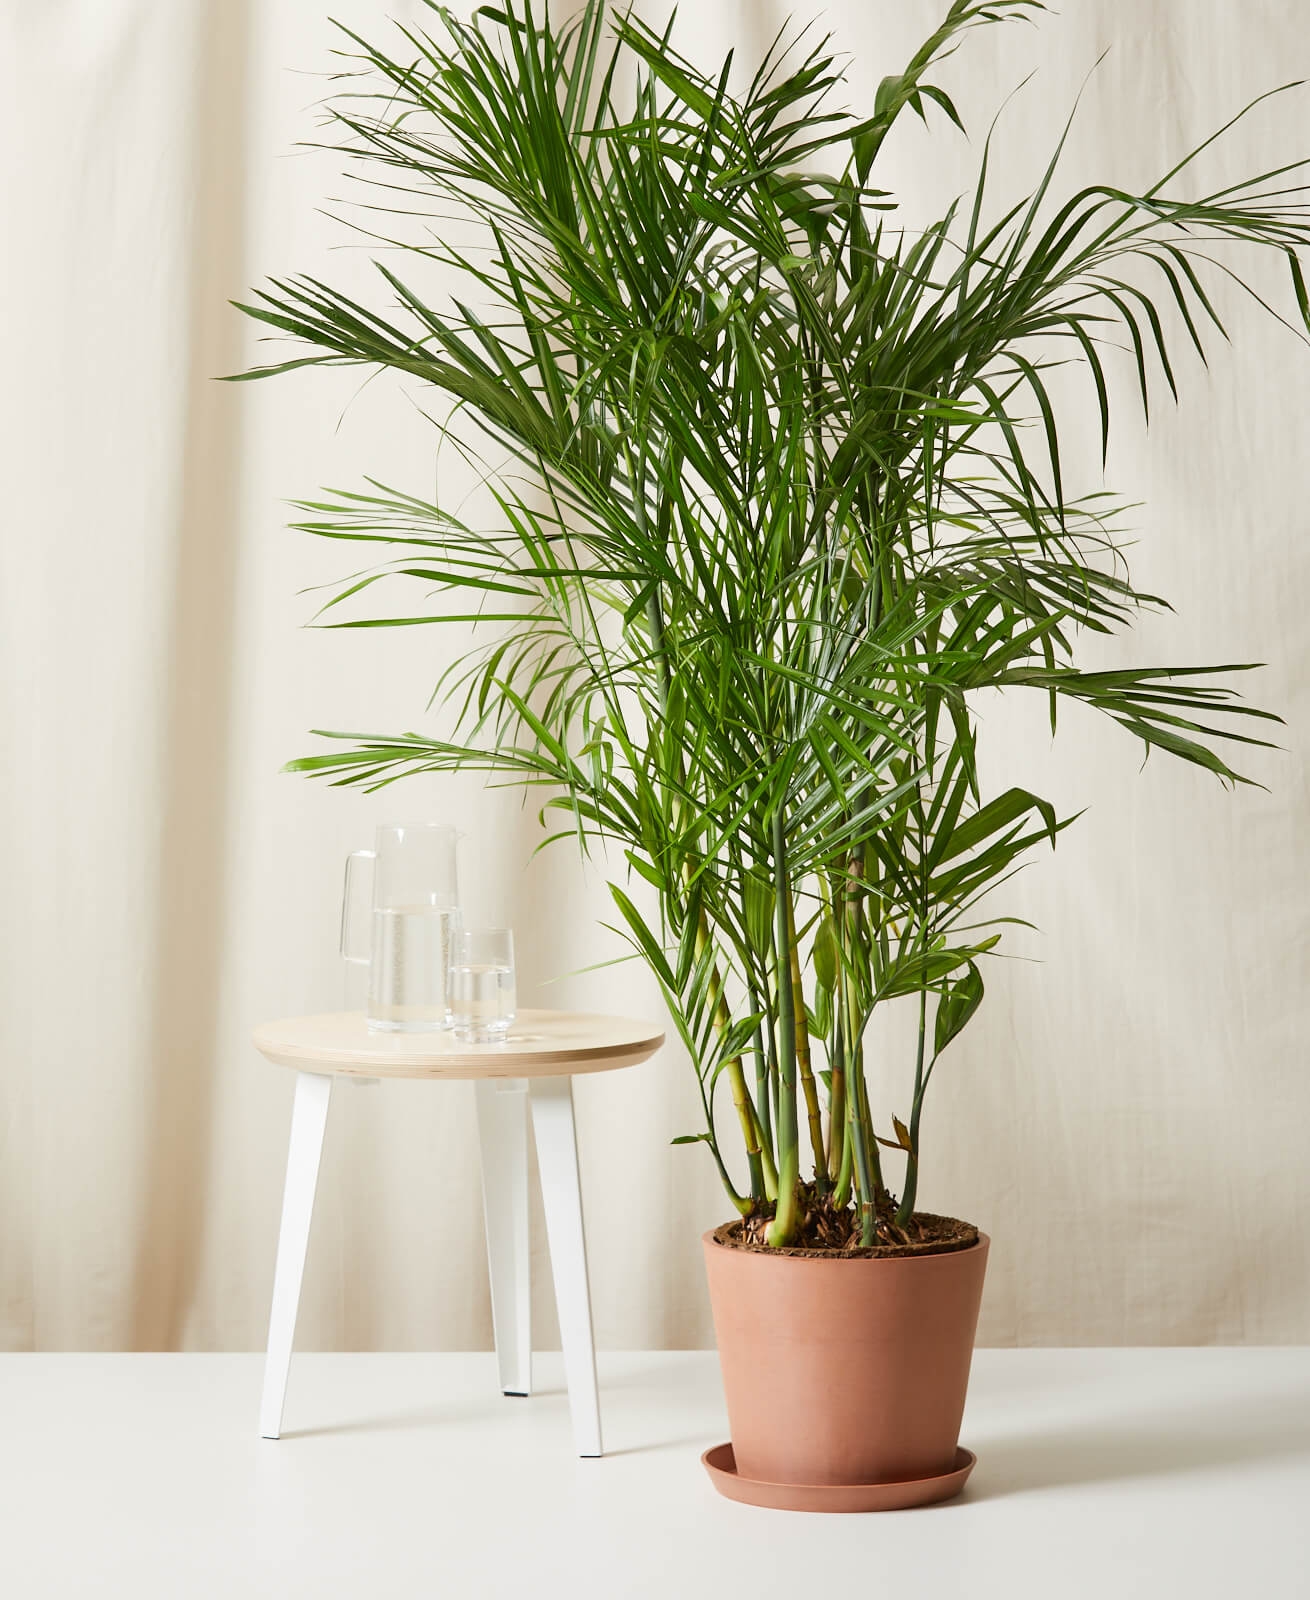 Bamboo Palm, Clay Pot - Image 0